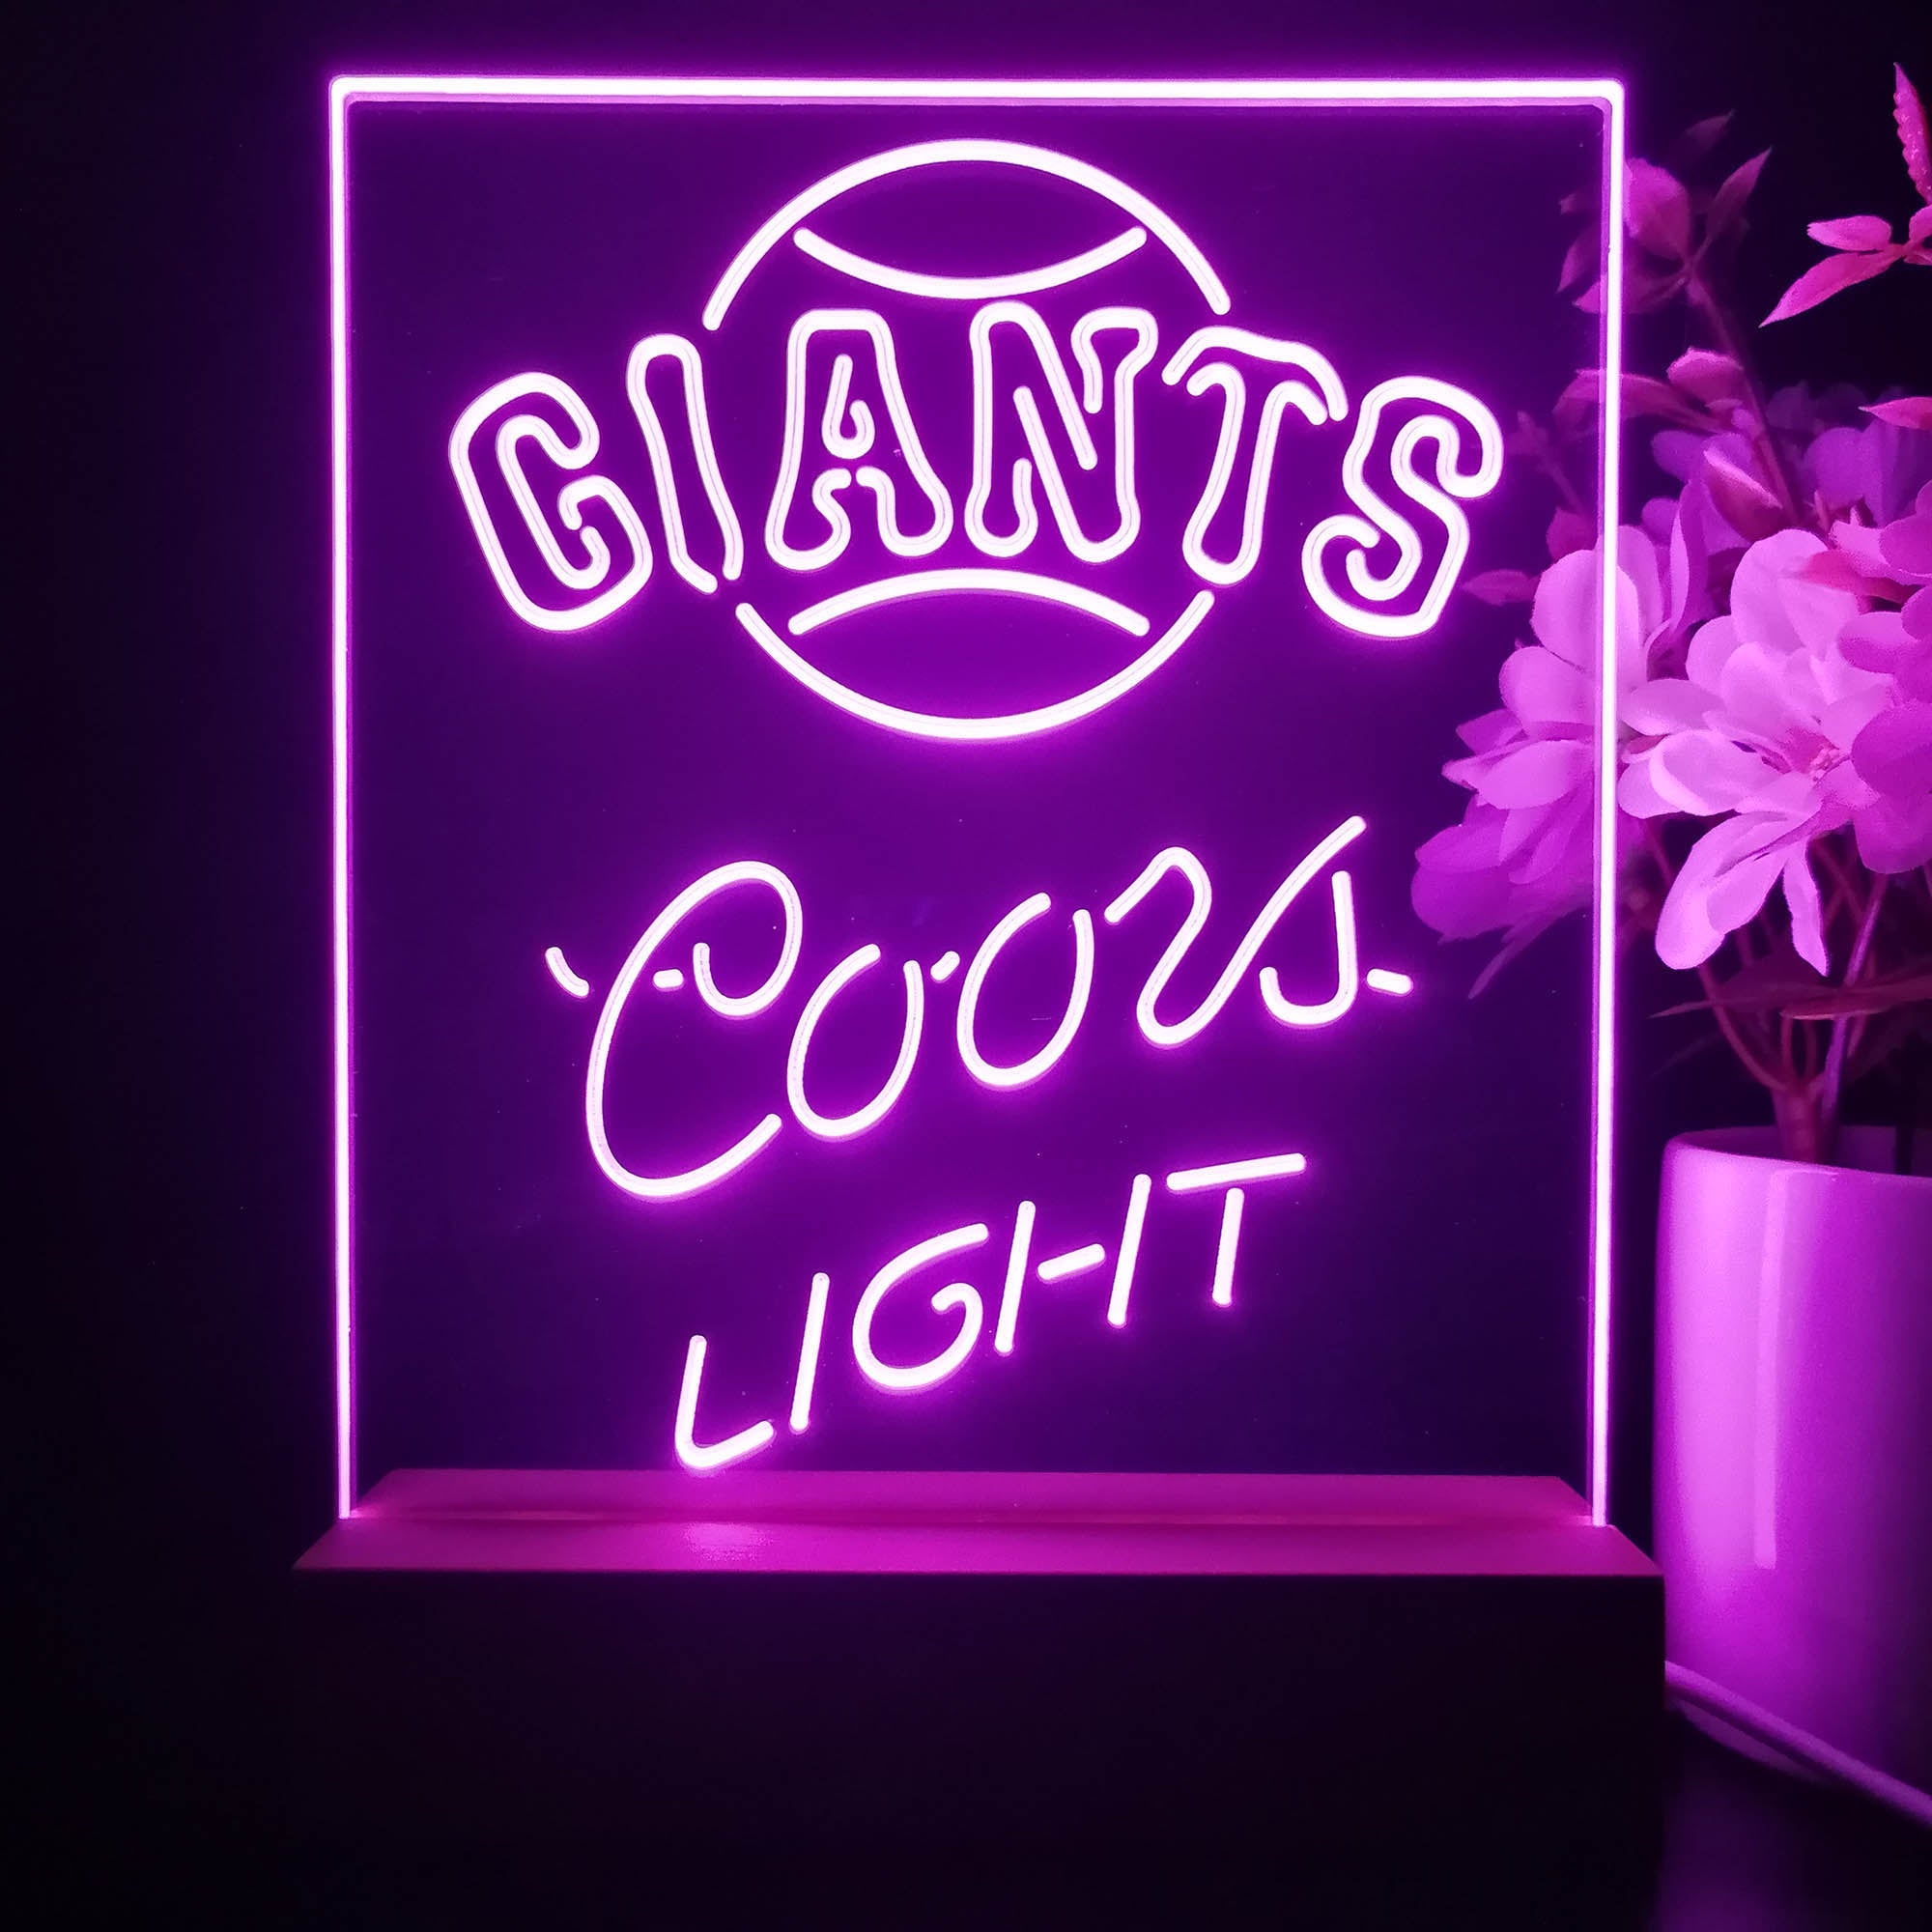 San Francisco Giants Coors Light Neon Sign Pub Bar Lamp